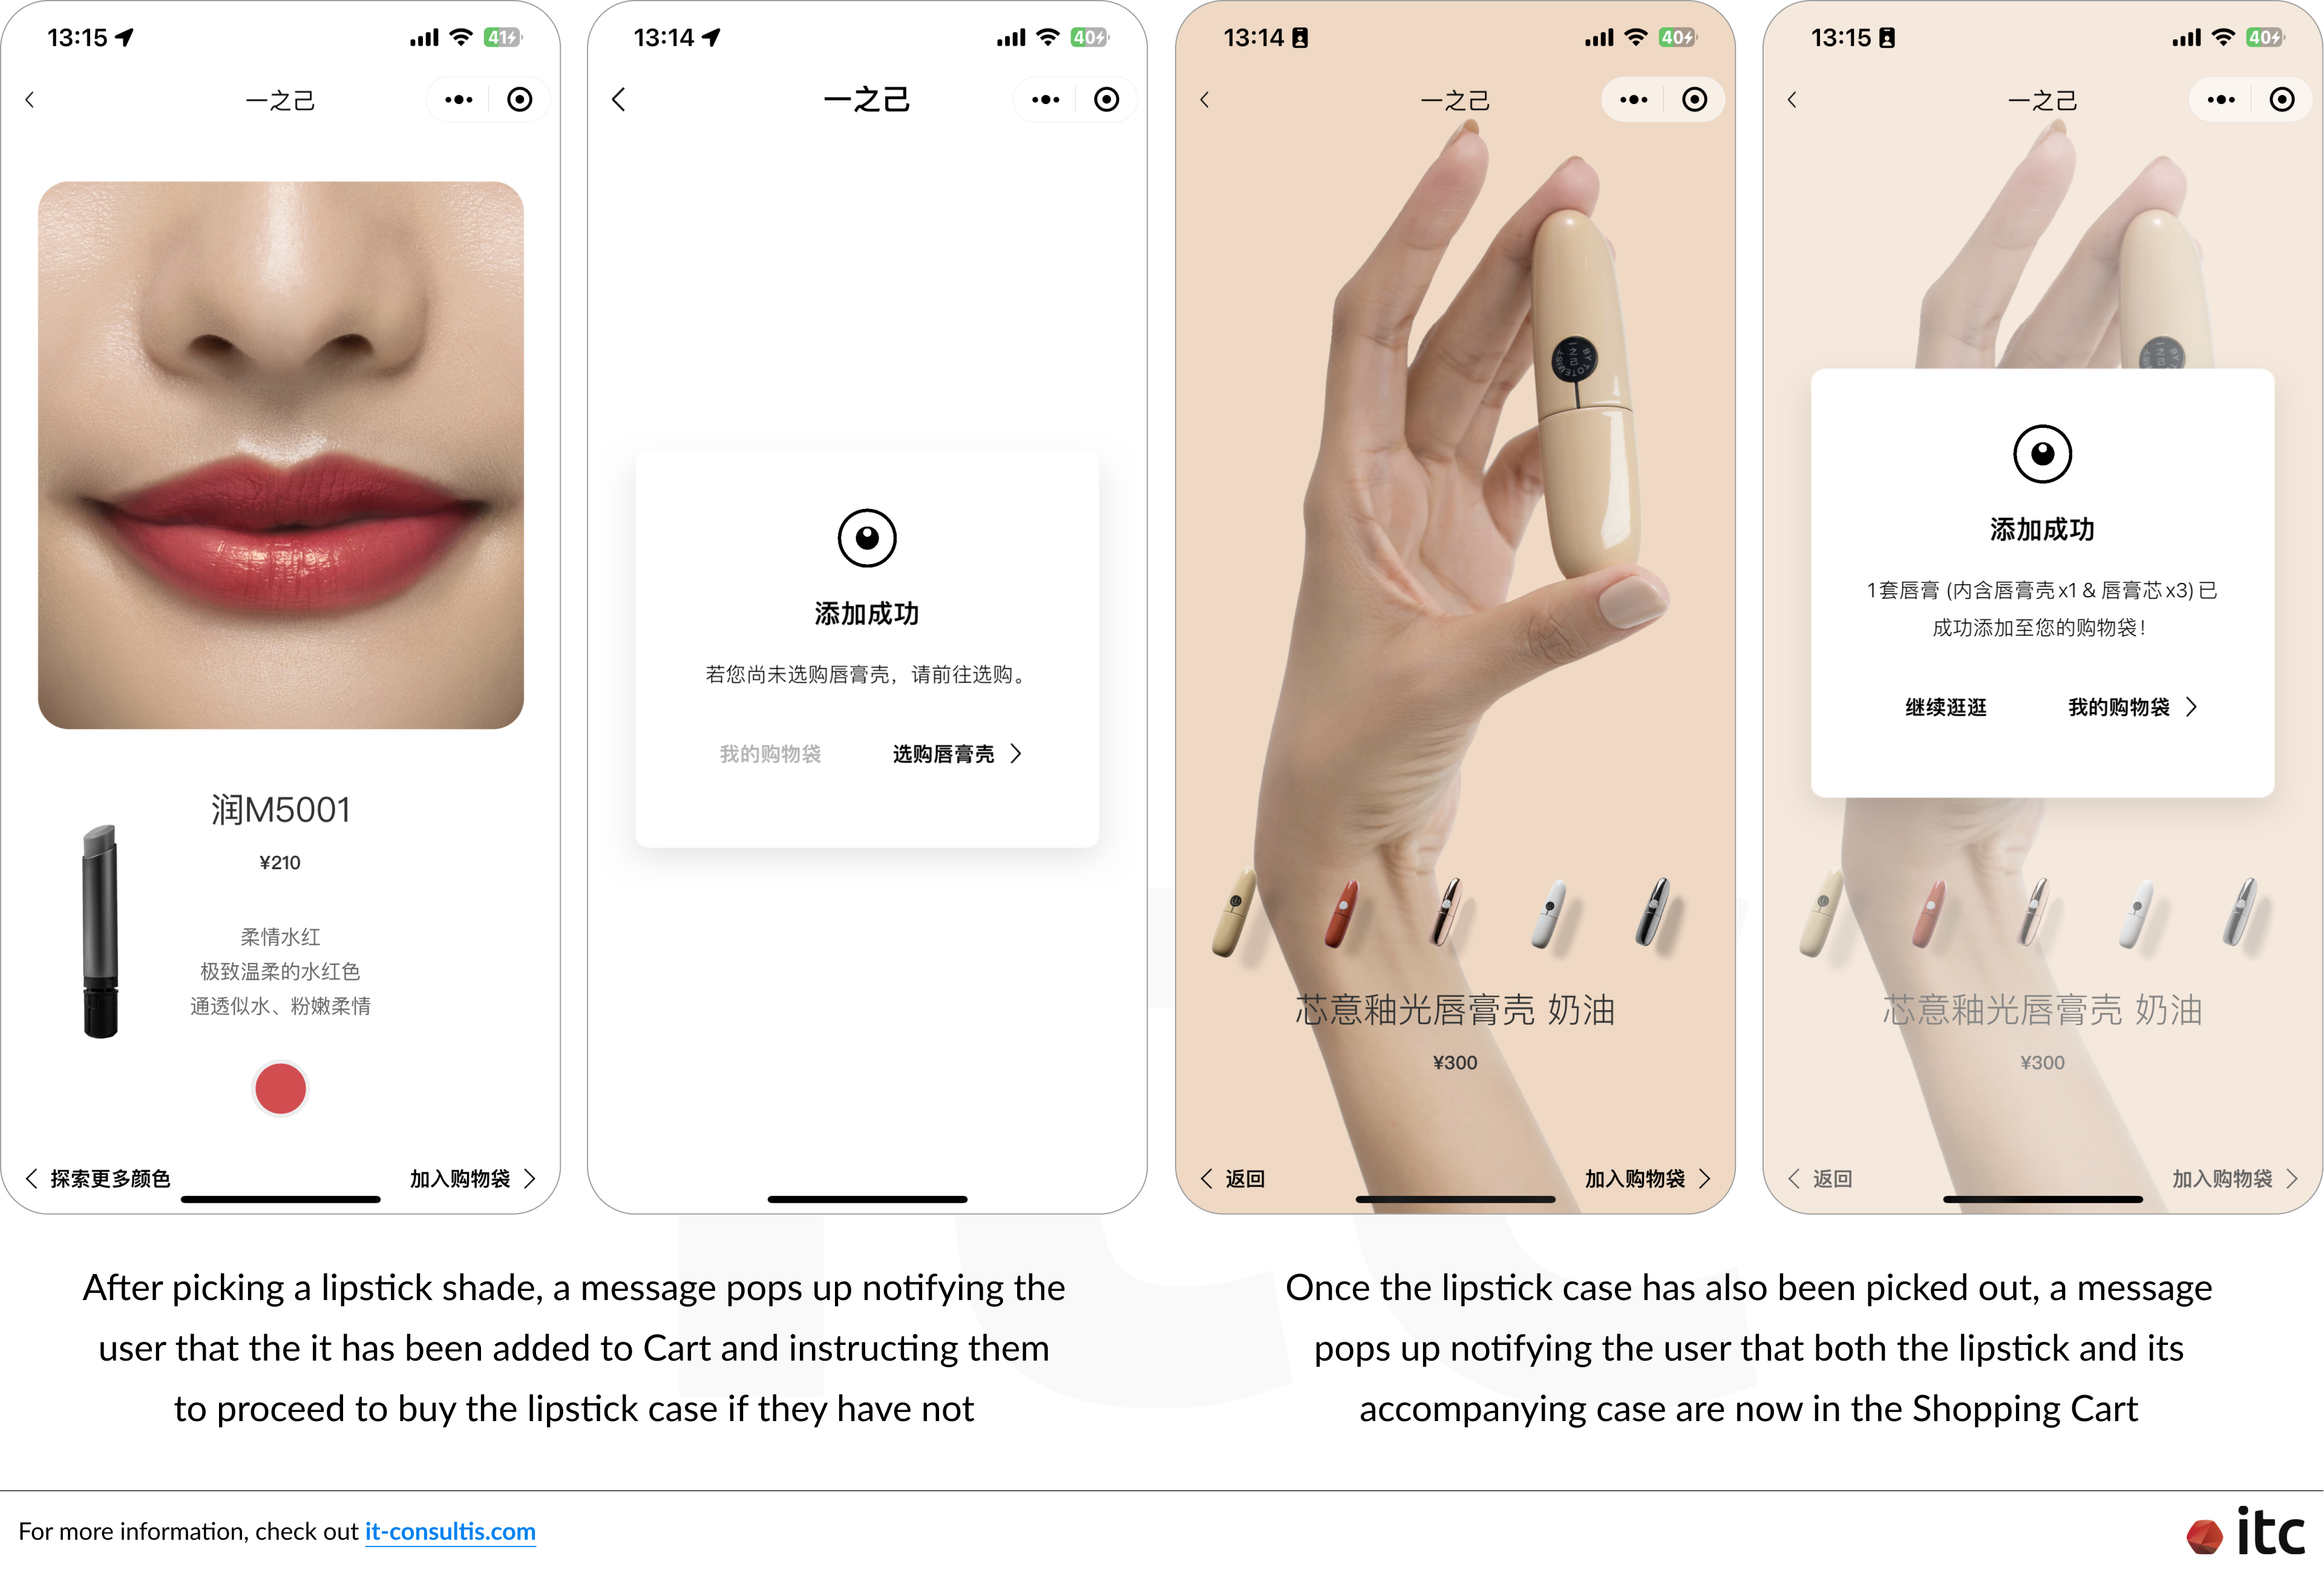 Bundled products - Lipstick x Case - on Yizhiji eCommerce WeChat Mini Program that are often purchased together